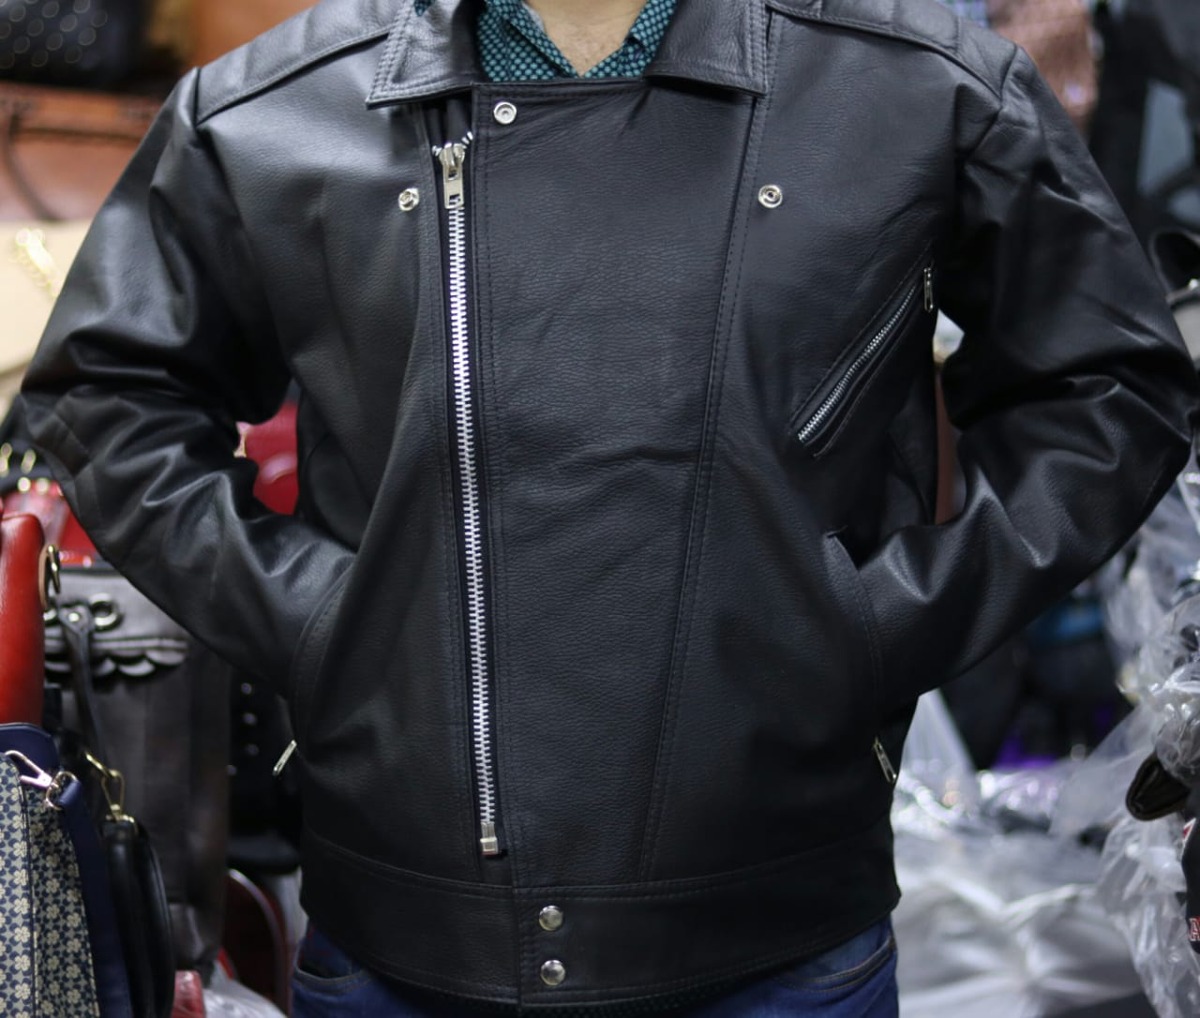 mercado livre jaqueta couro masculina